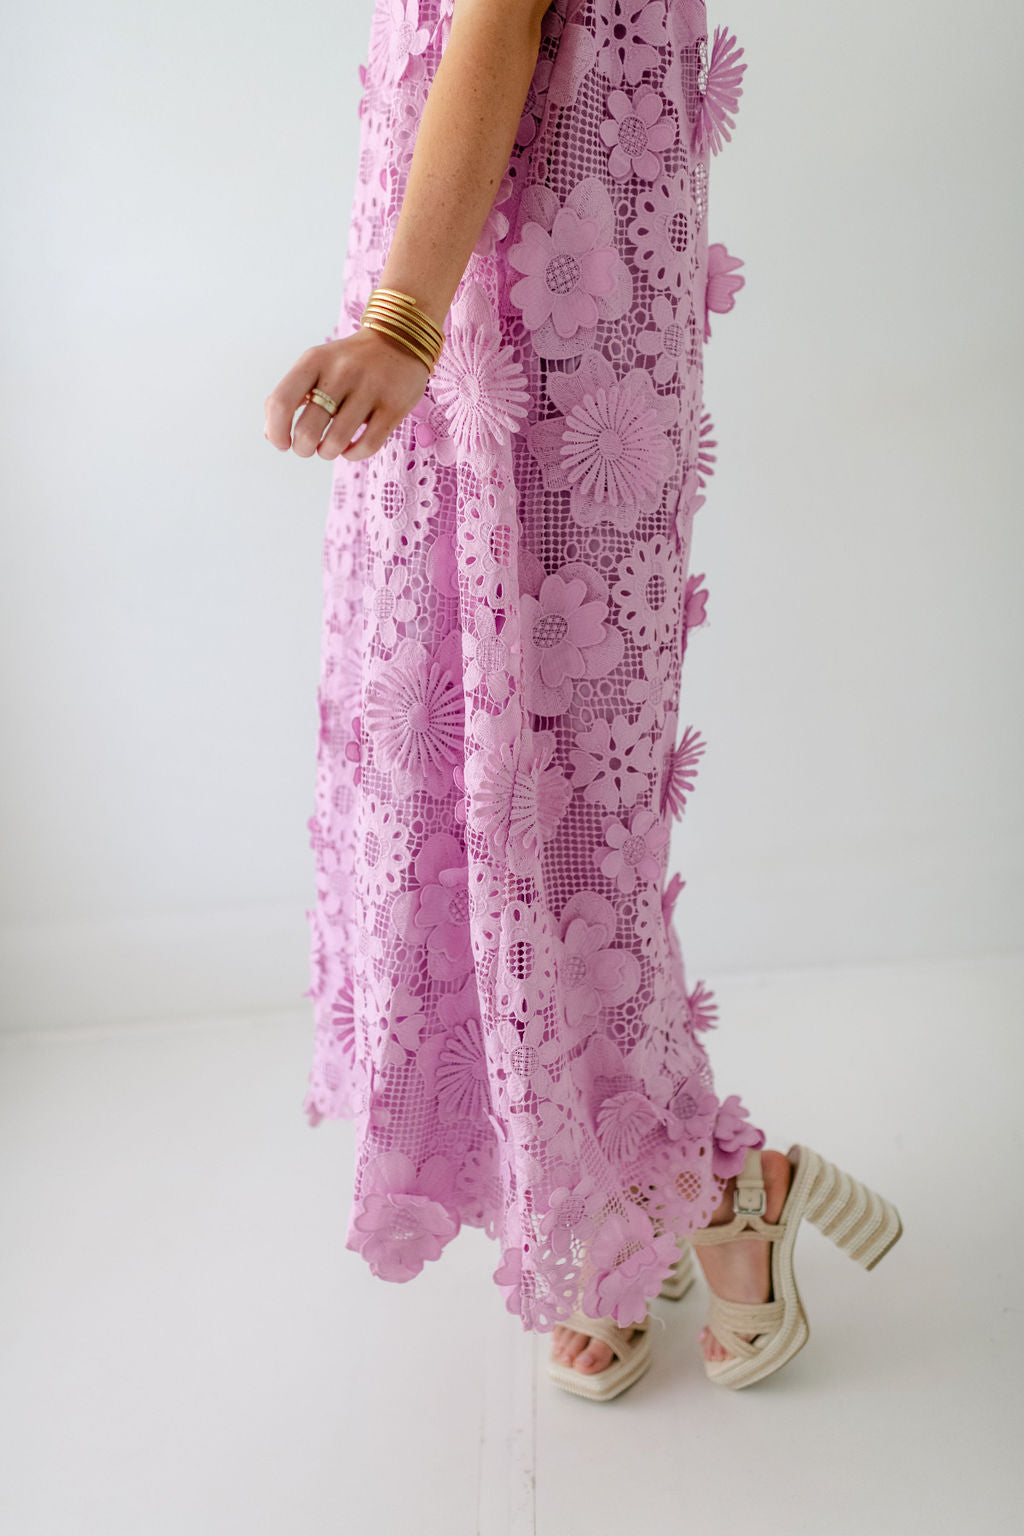 J.Marie Collections Bria Lavender Lace Midi Dress